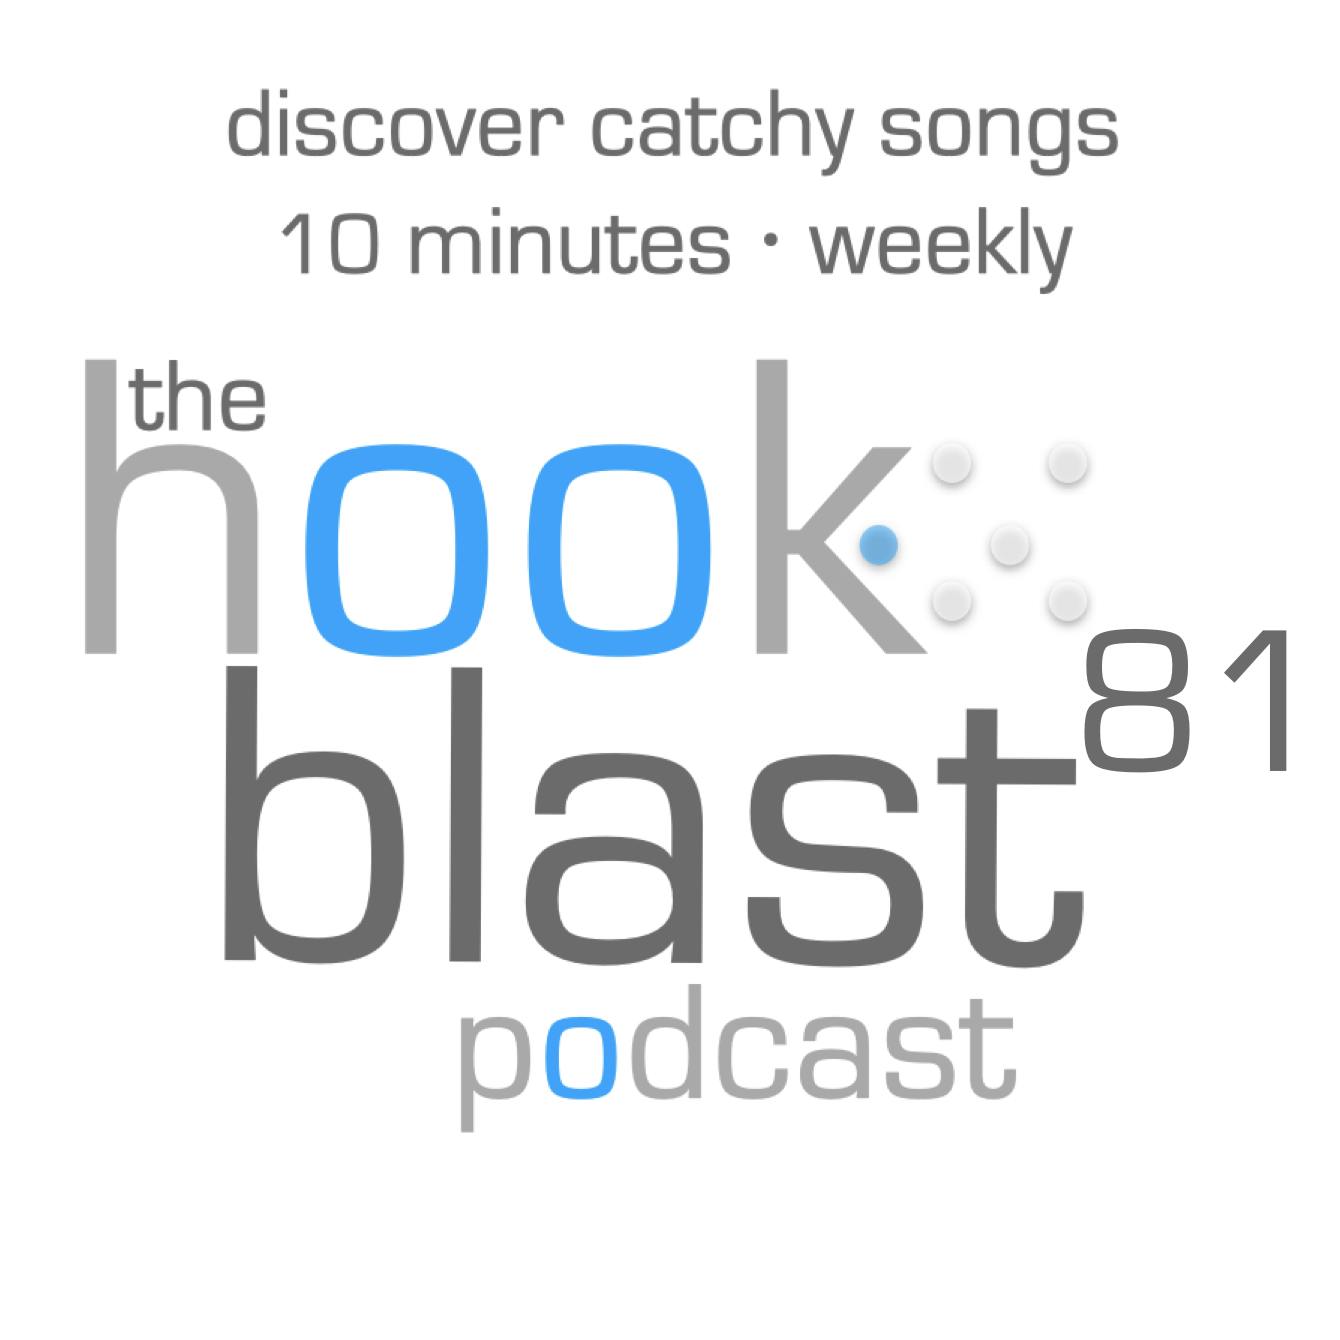 The Hookblast Podcast - Episode 81